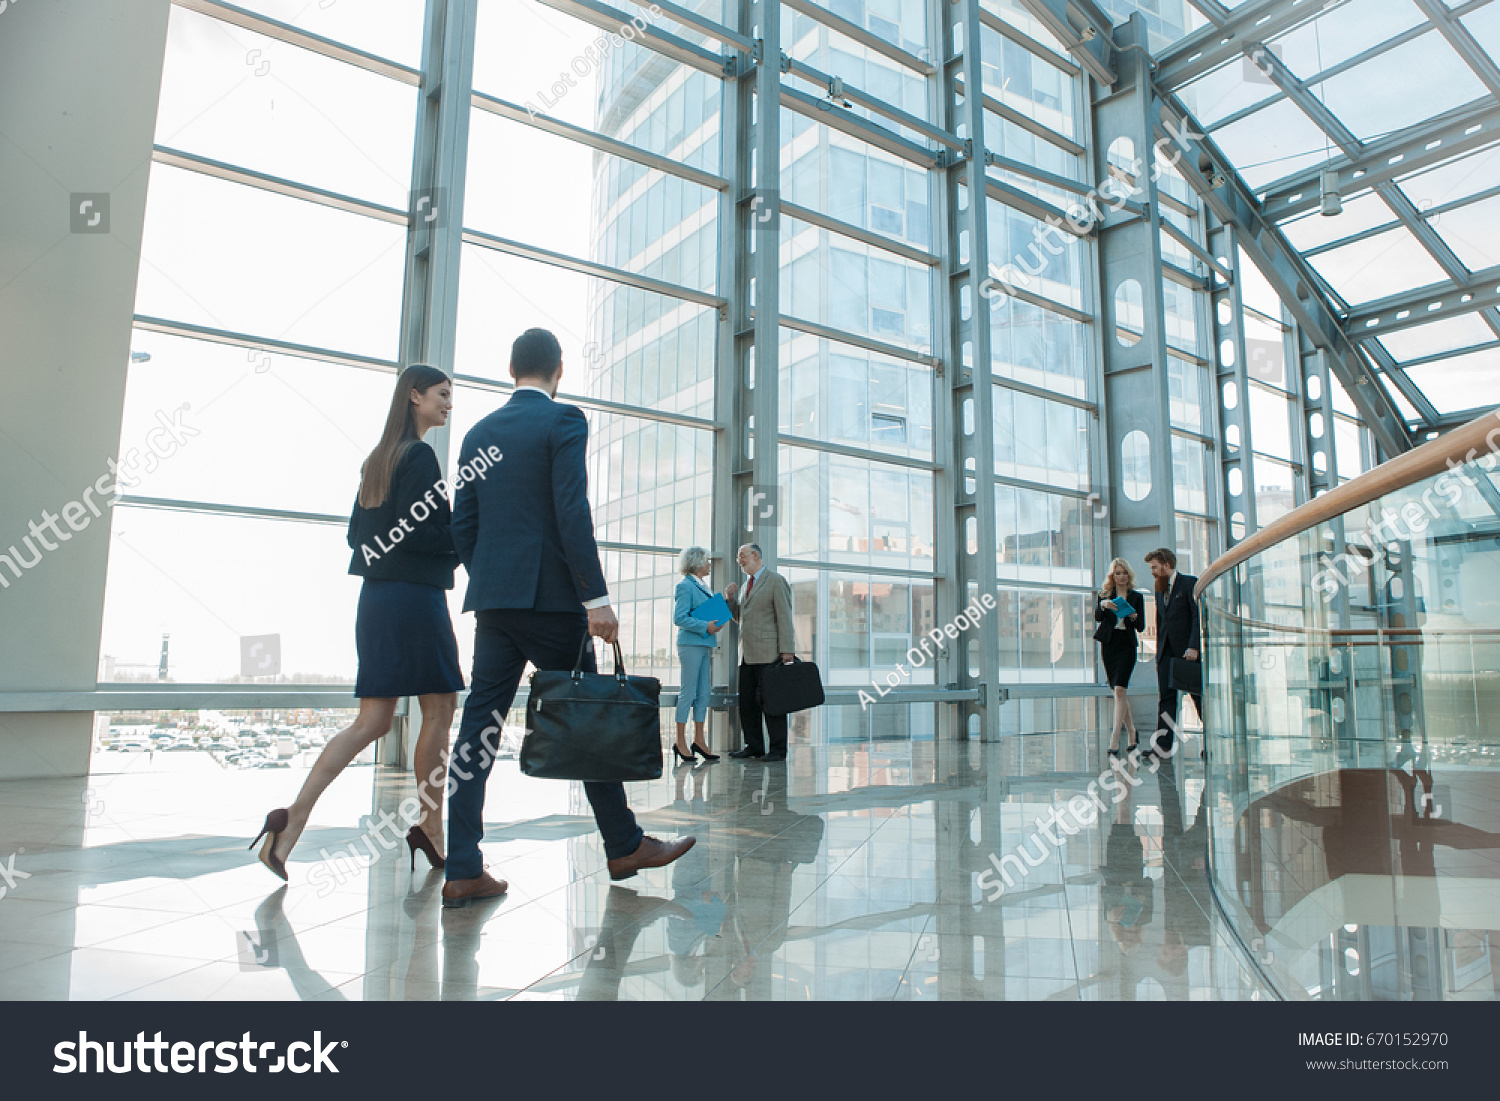 Business people walking in modern glass office building #670152970